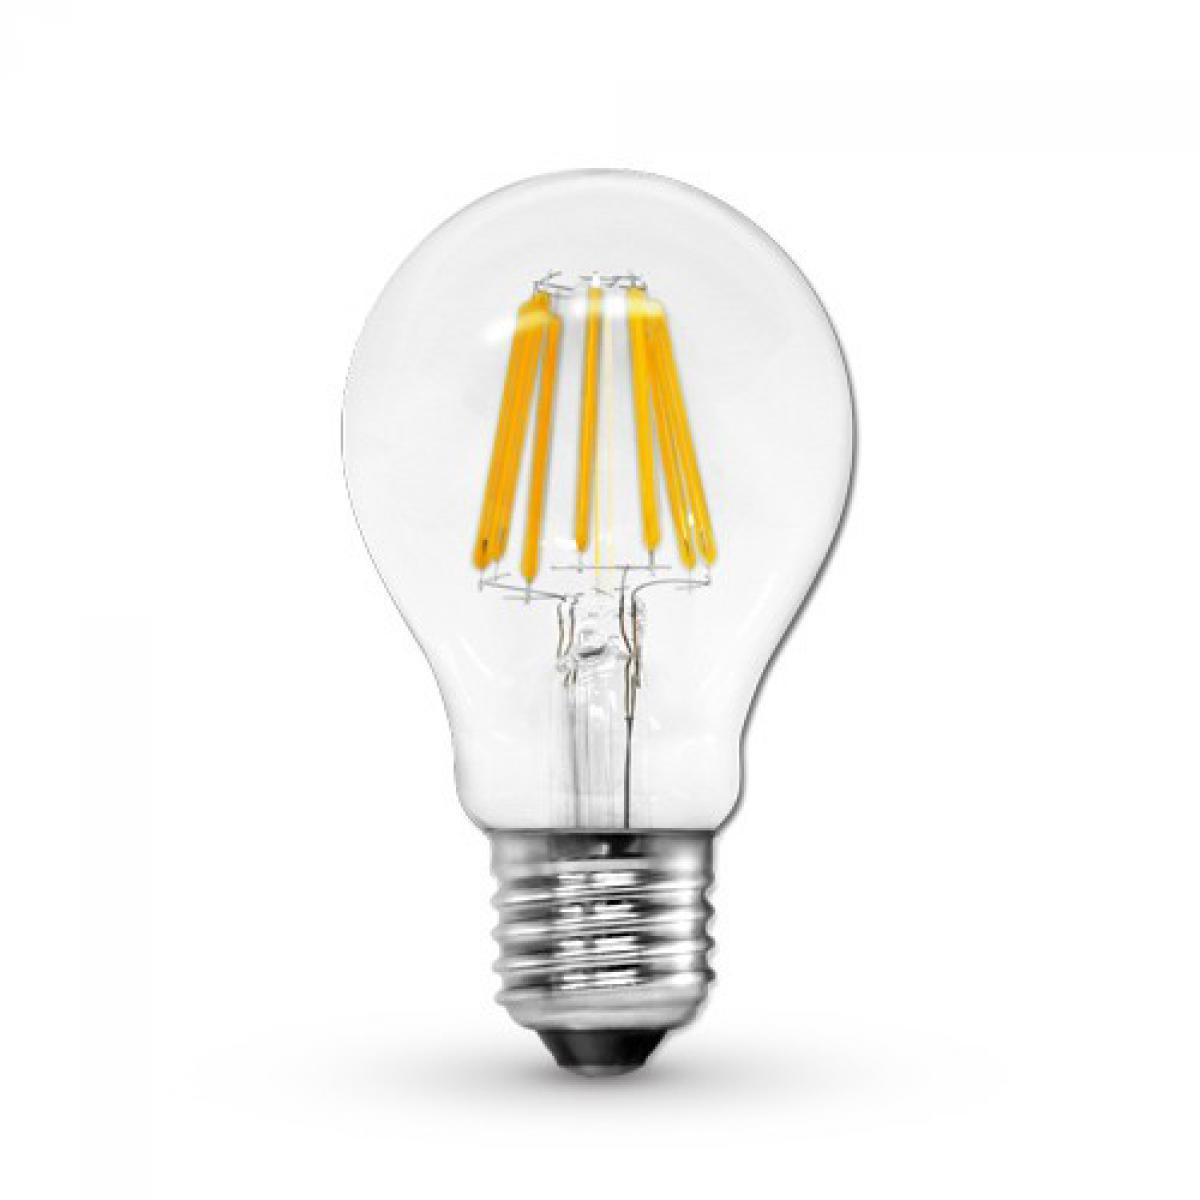 LED Leuchtmittel Ersatz LED-Glühbirnen- E27 - 10W - 1050Lm - Glühfaden -  warmweiß, LED Leuchtmittel, LED Lampe, LED Glühbirne, LED Birne - Aga24